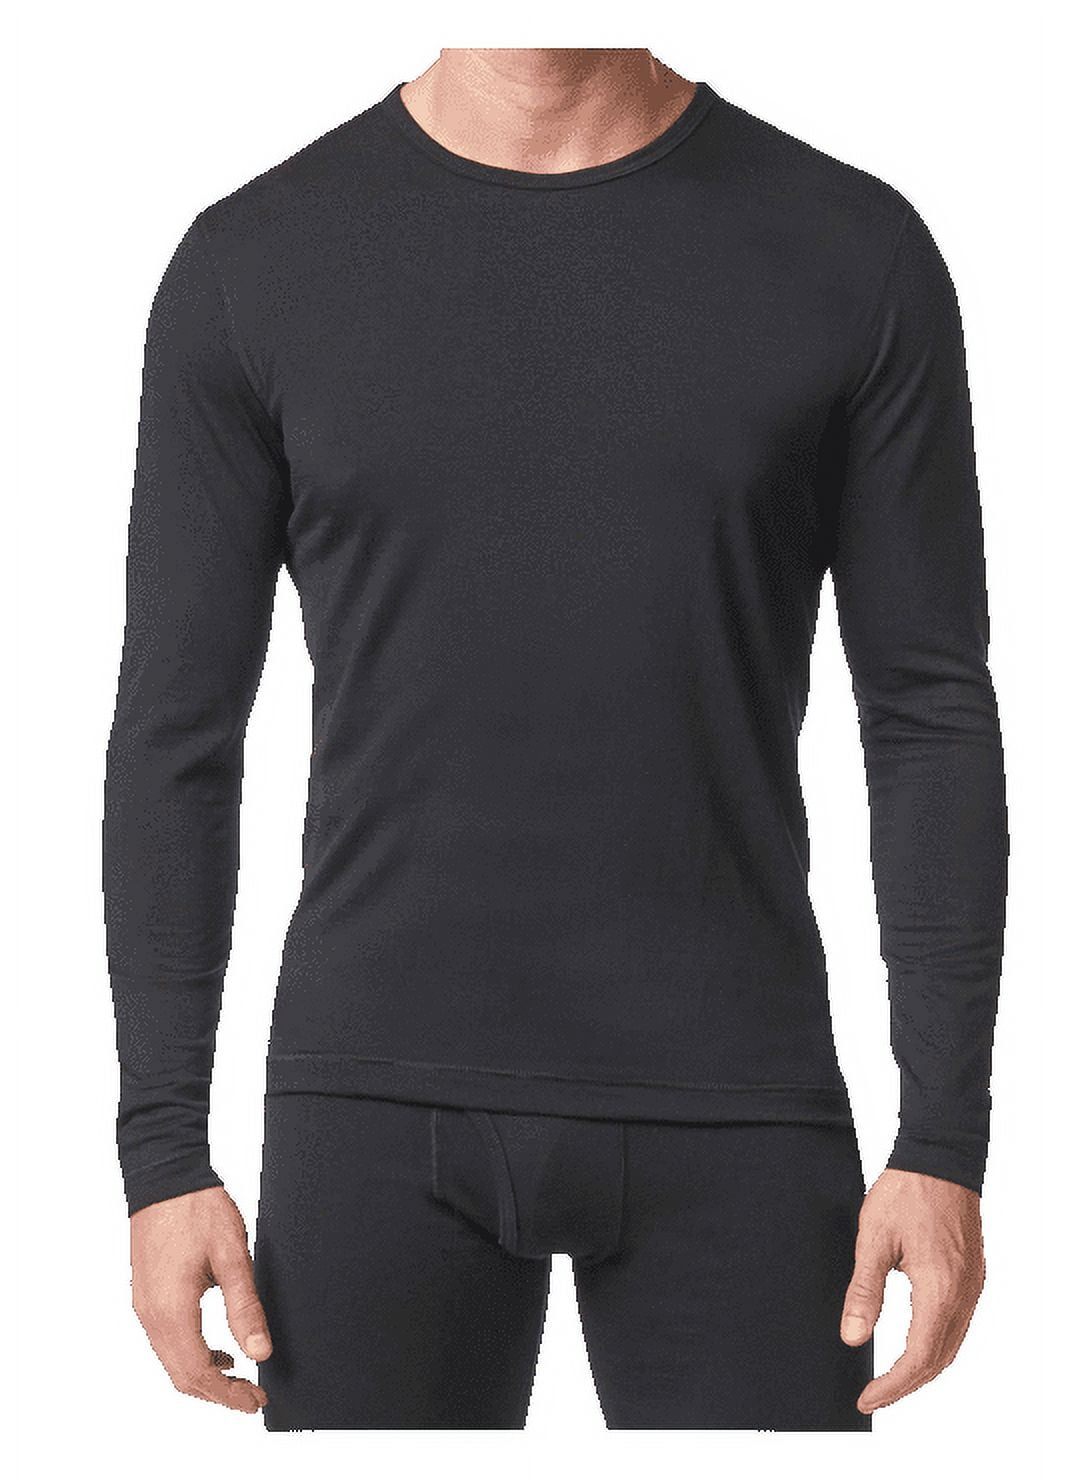 Stanfield's Men's Thermal Pure Merino Wool Long Sleeve Shirt Baselayer